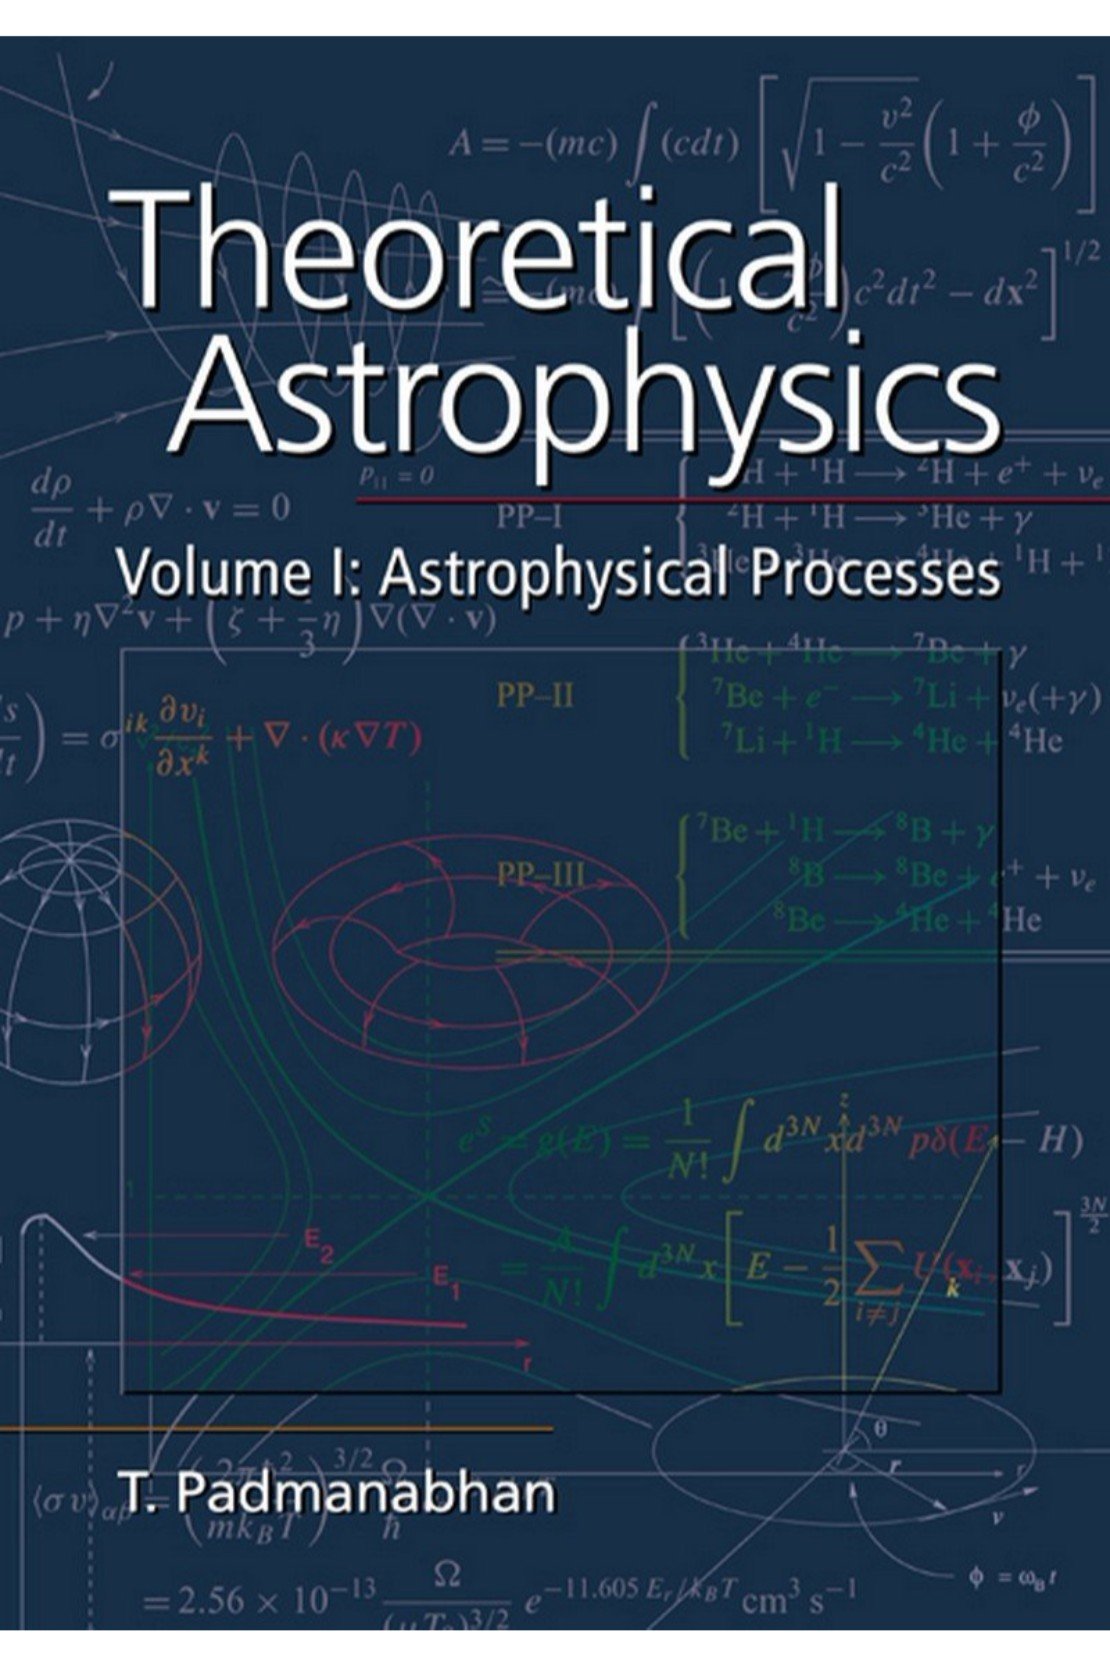 Книги астрофизиков. Ядерная астрофизика. Астрофизика книга. Astrophysics processes. Ядерная астрофизика книга 1986.